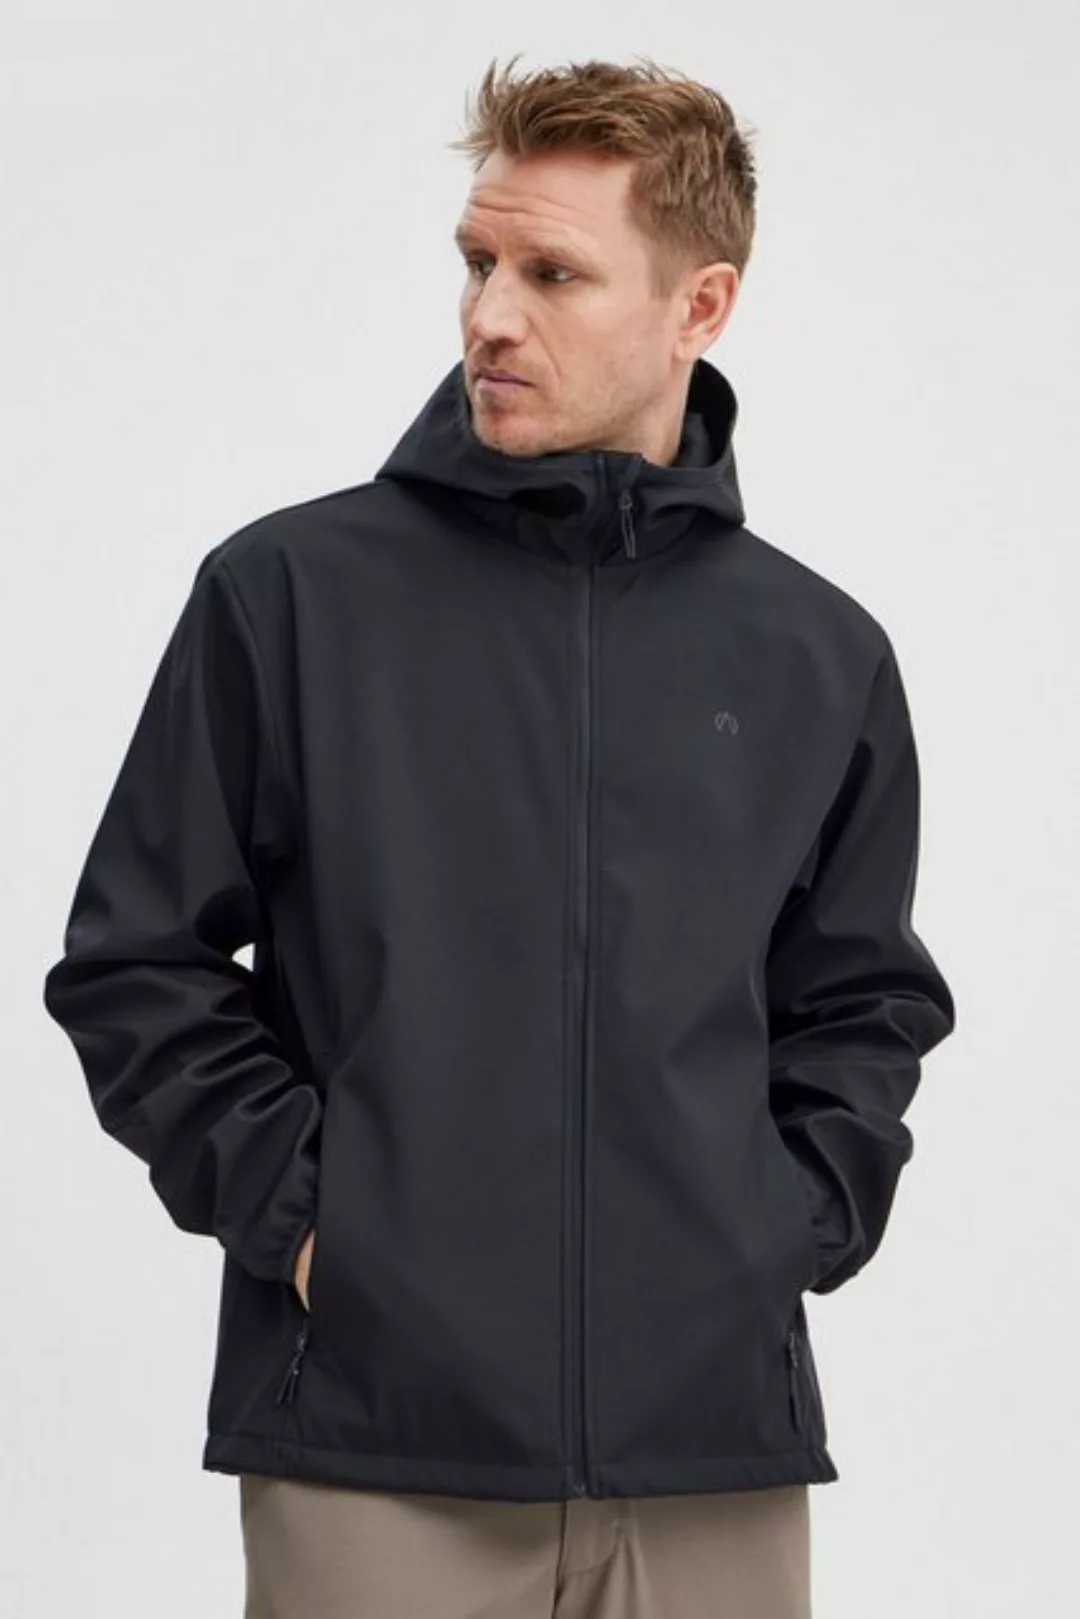 North Bend Softshelljacke NBLuango M Softshell Jacket funktionale Softshell günstig online kaufen